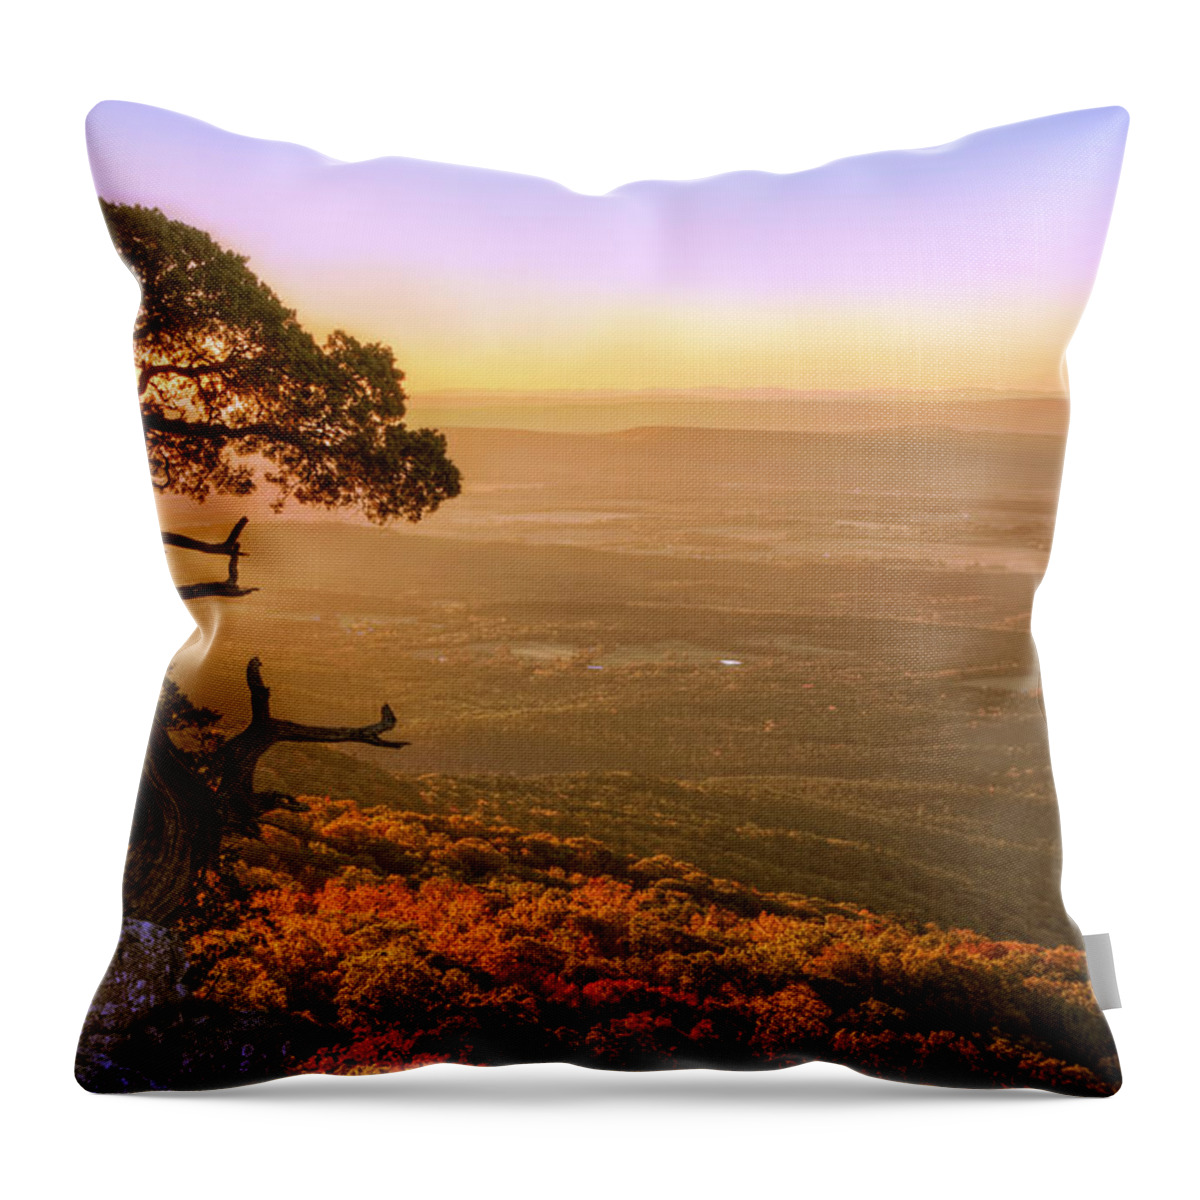 Mt. Magazine Throw Pillow featuring the photograph Cedar Tree atop Mt. Magazine - Arkansas - Autumn by Jason Politte